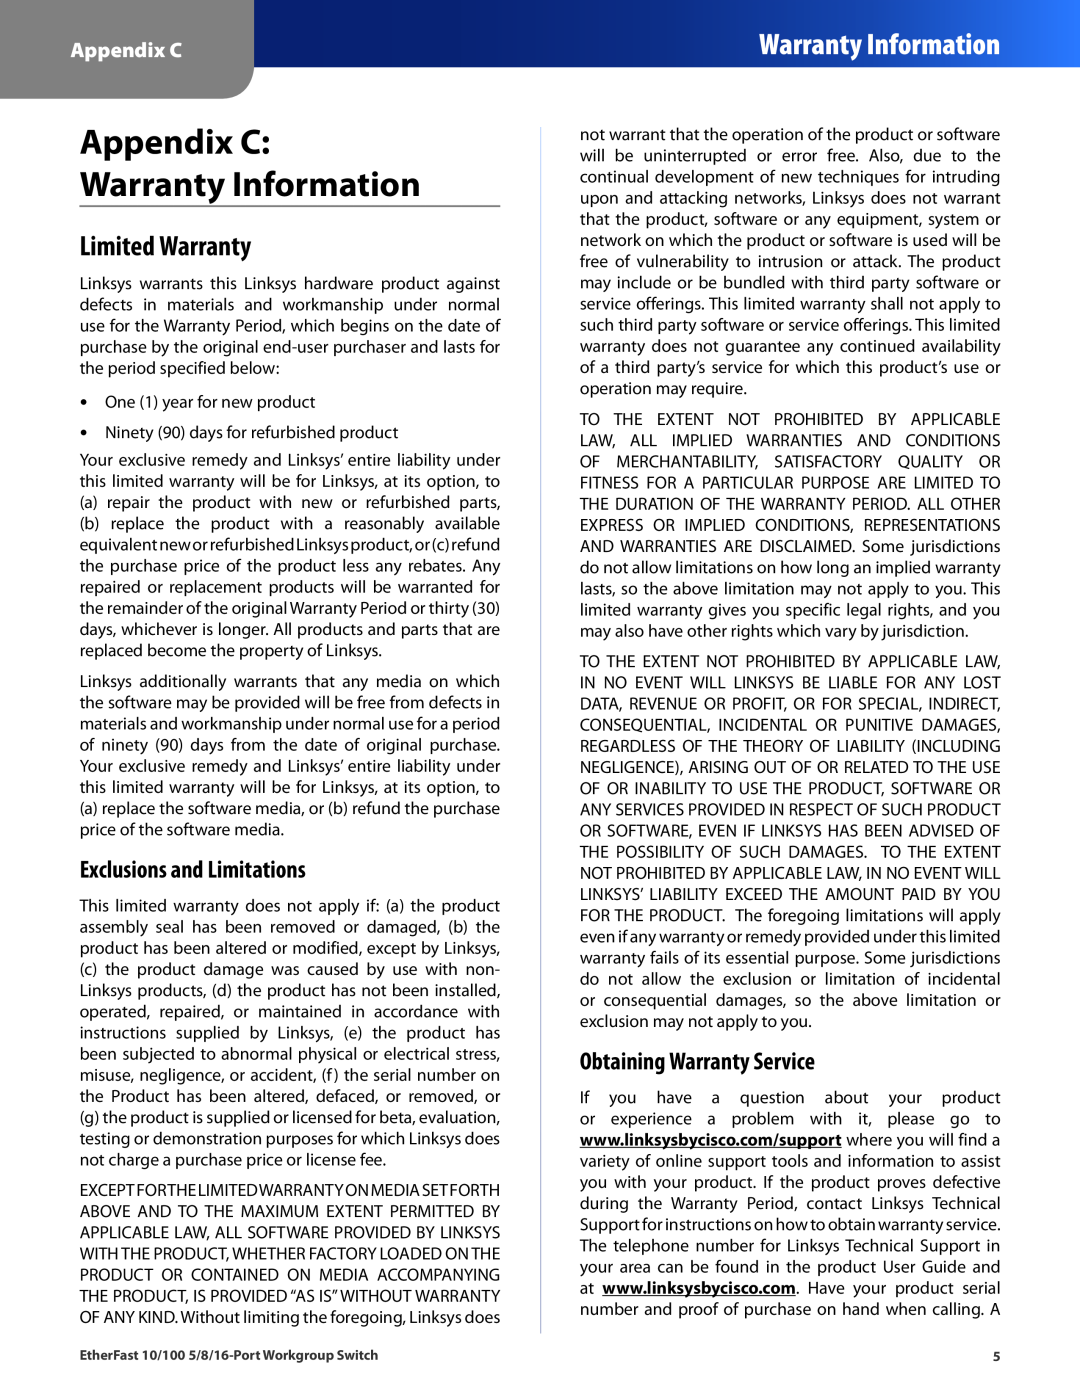 Linksys EZXS16W Appendix C Warranty Information, Limited Warranty, Exclusions and Limitations, Obtaining Warranty Service 